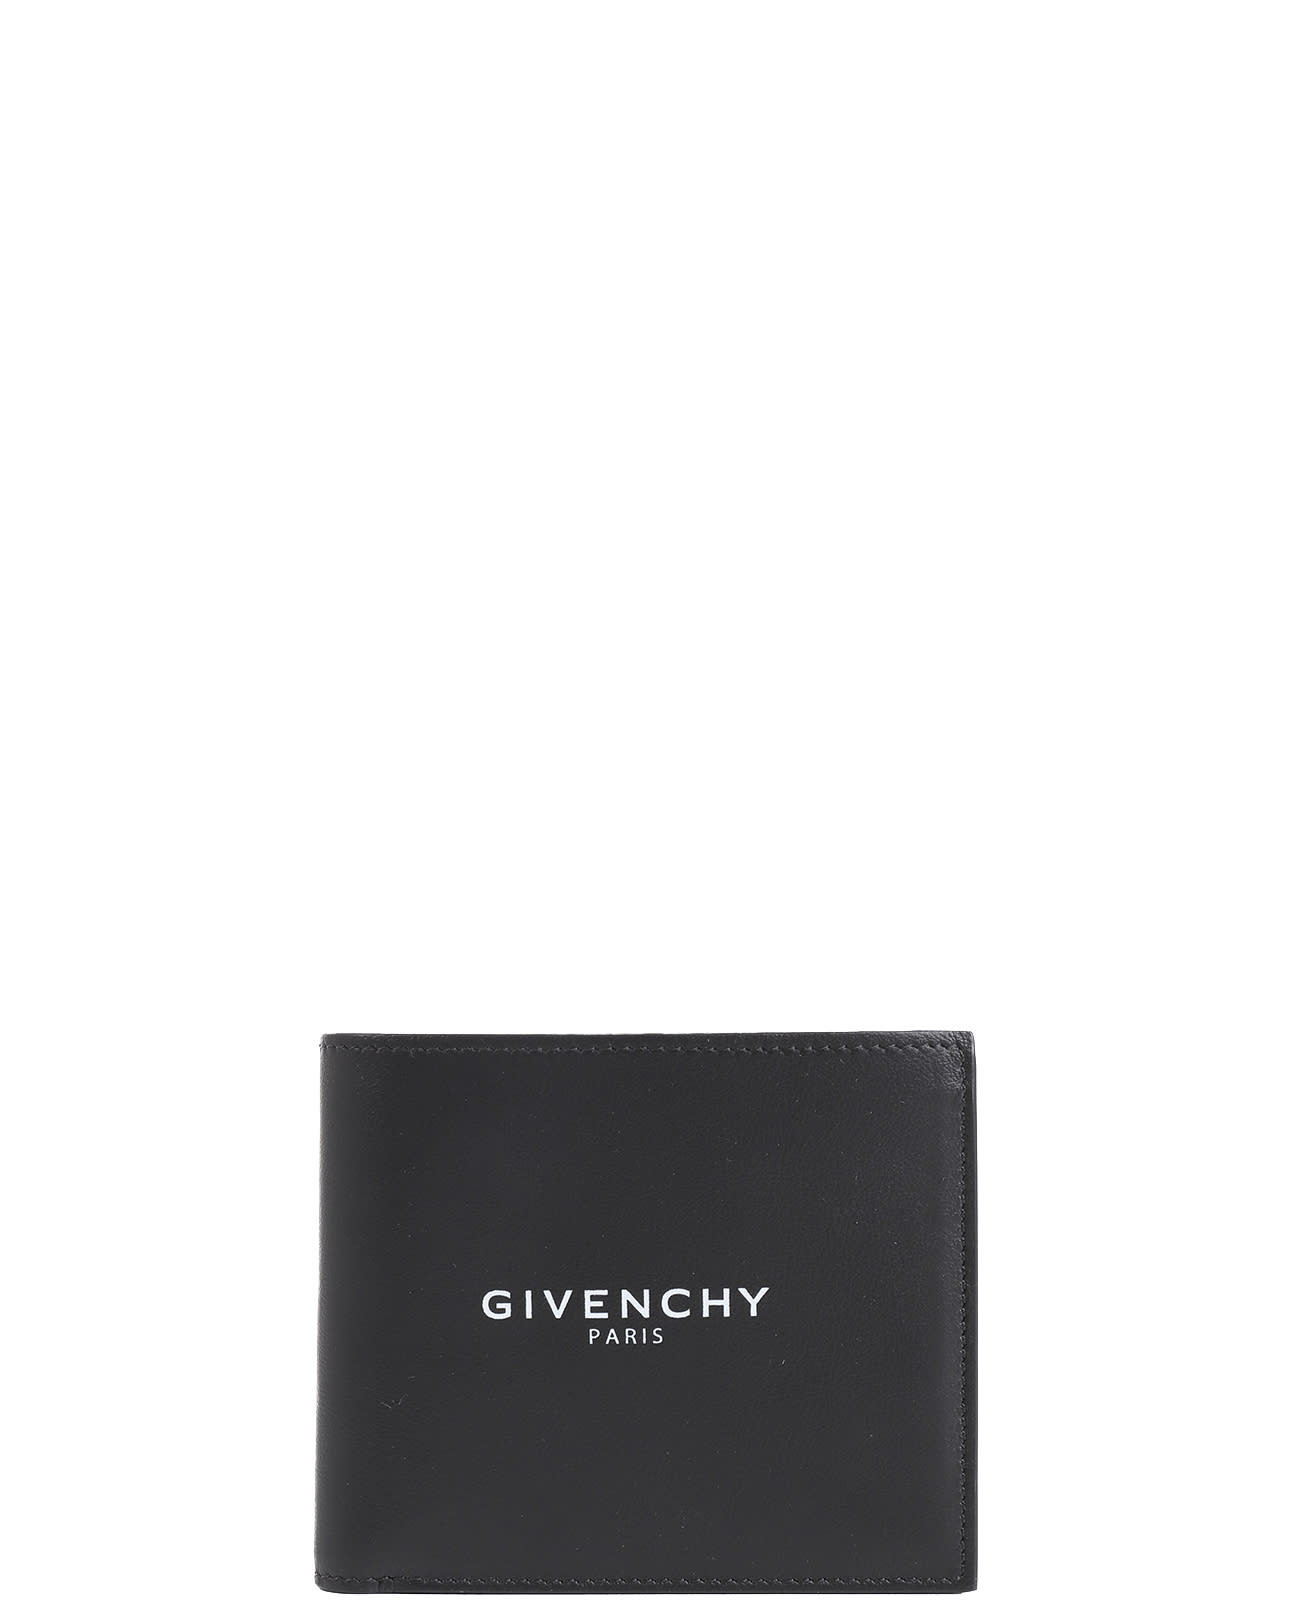 Givenchy Black Billfold Wallet